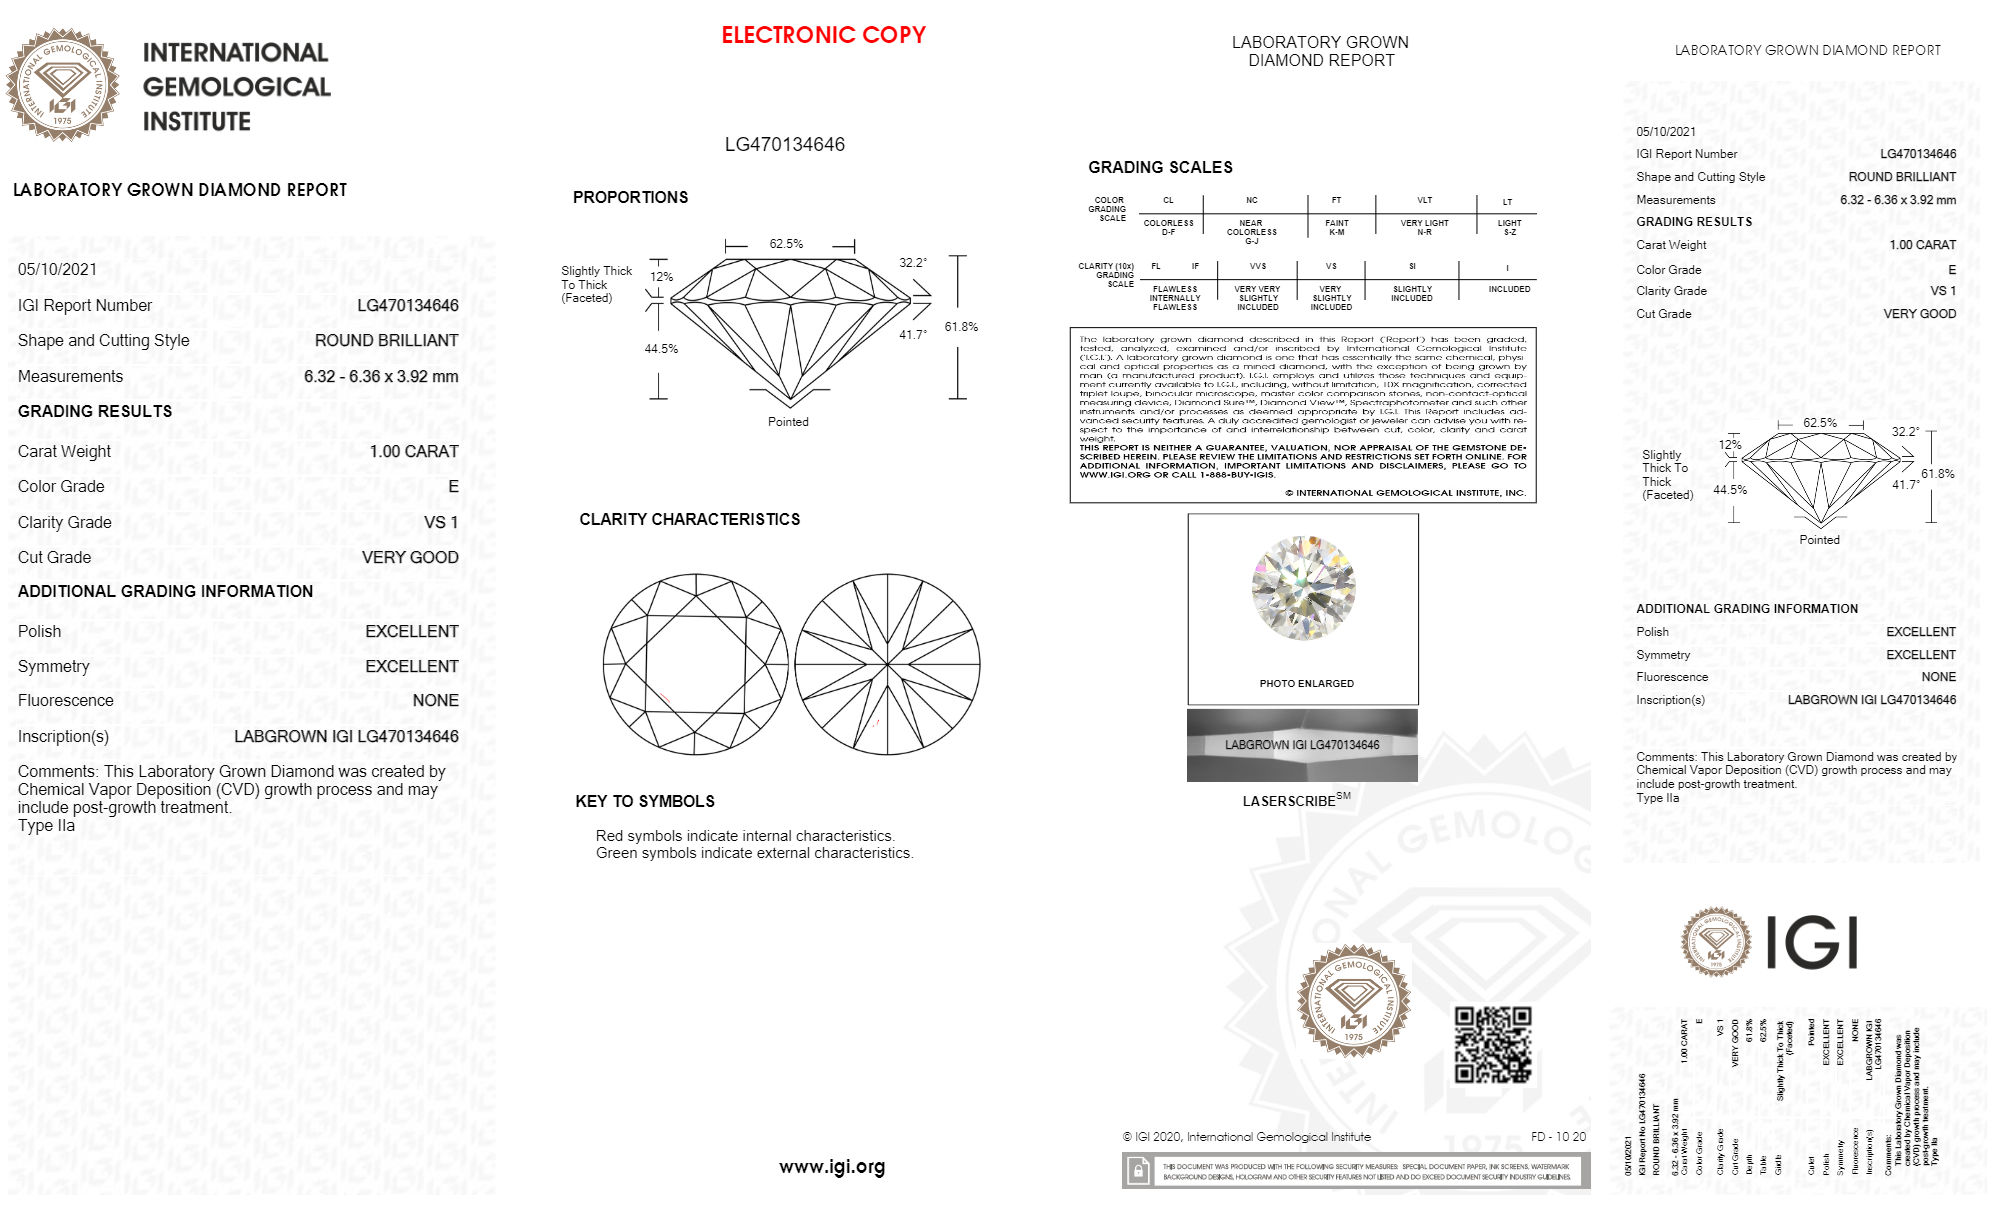 ROUND 1ct D VS2  Certified Lab Grown Diamond 541252046 EC5016